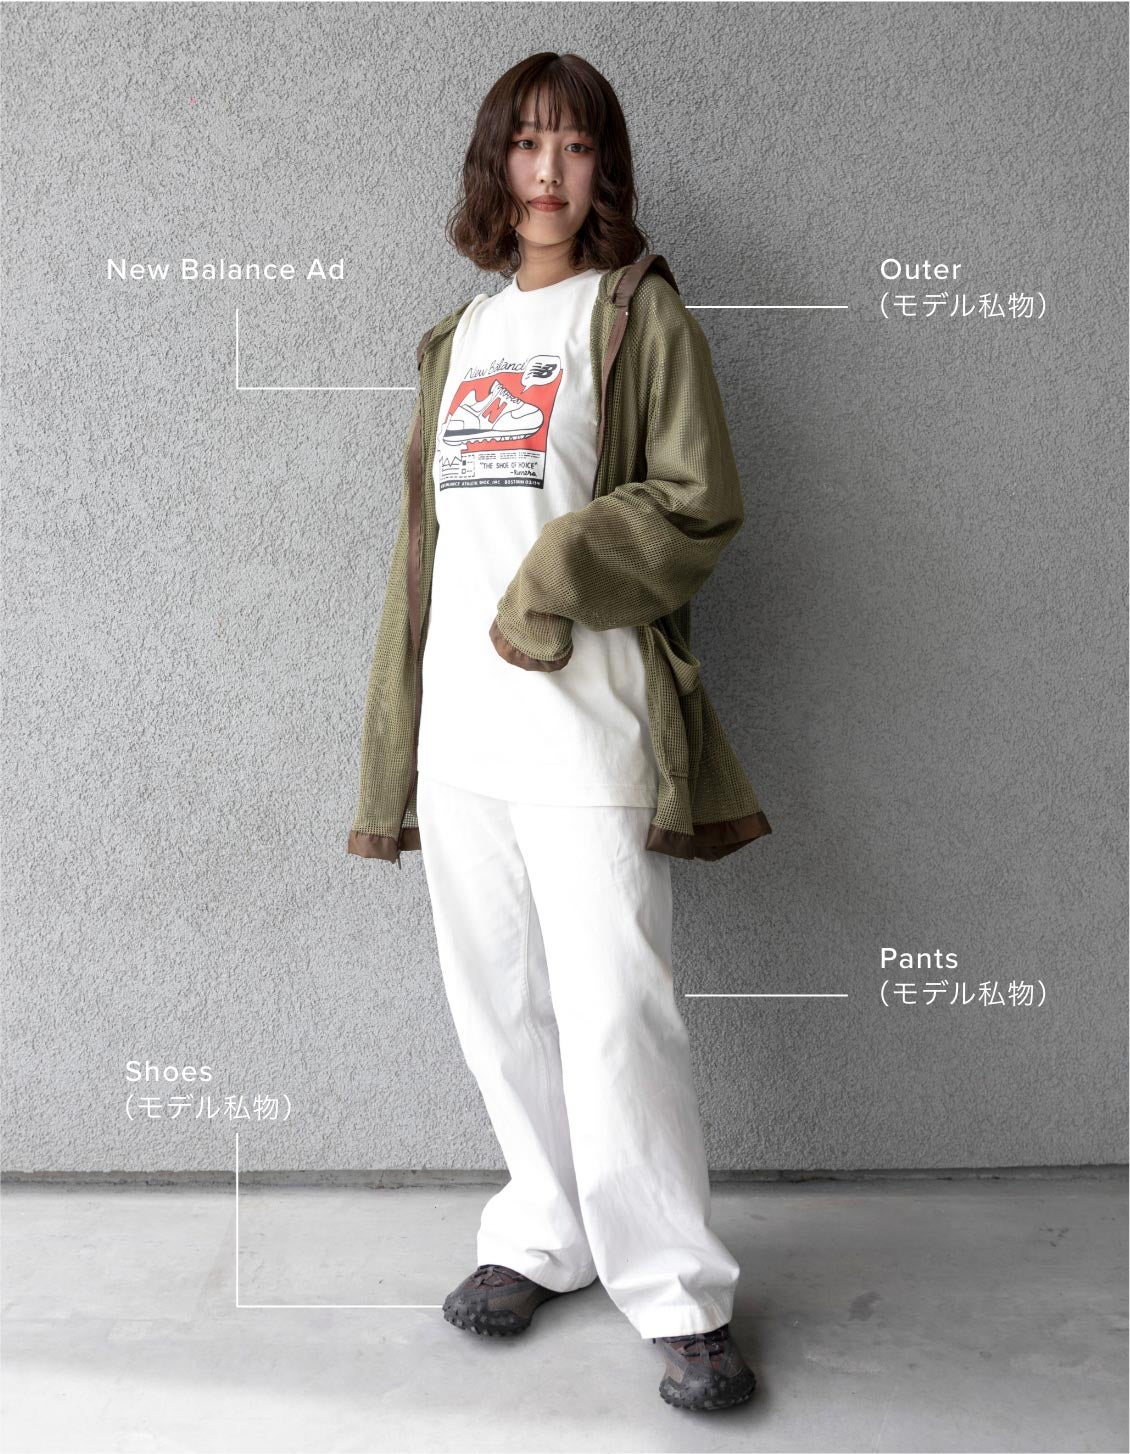 Kinu Natsume コーディネート詳細 Tシャツ:New Balance Ad, Outer:モデル私物, Pants:モデル私物, Shoes:モデル私物